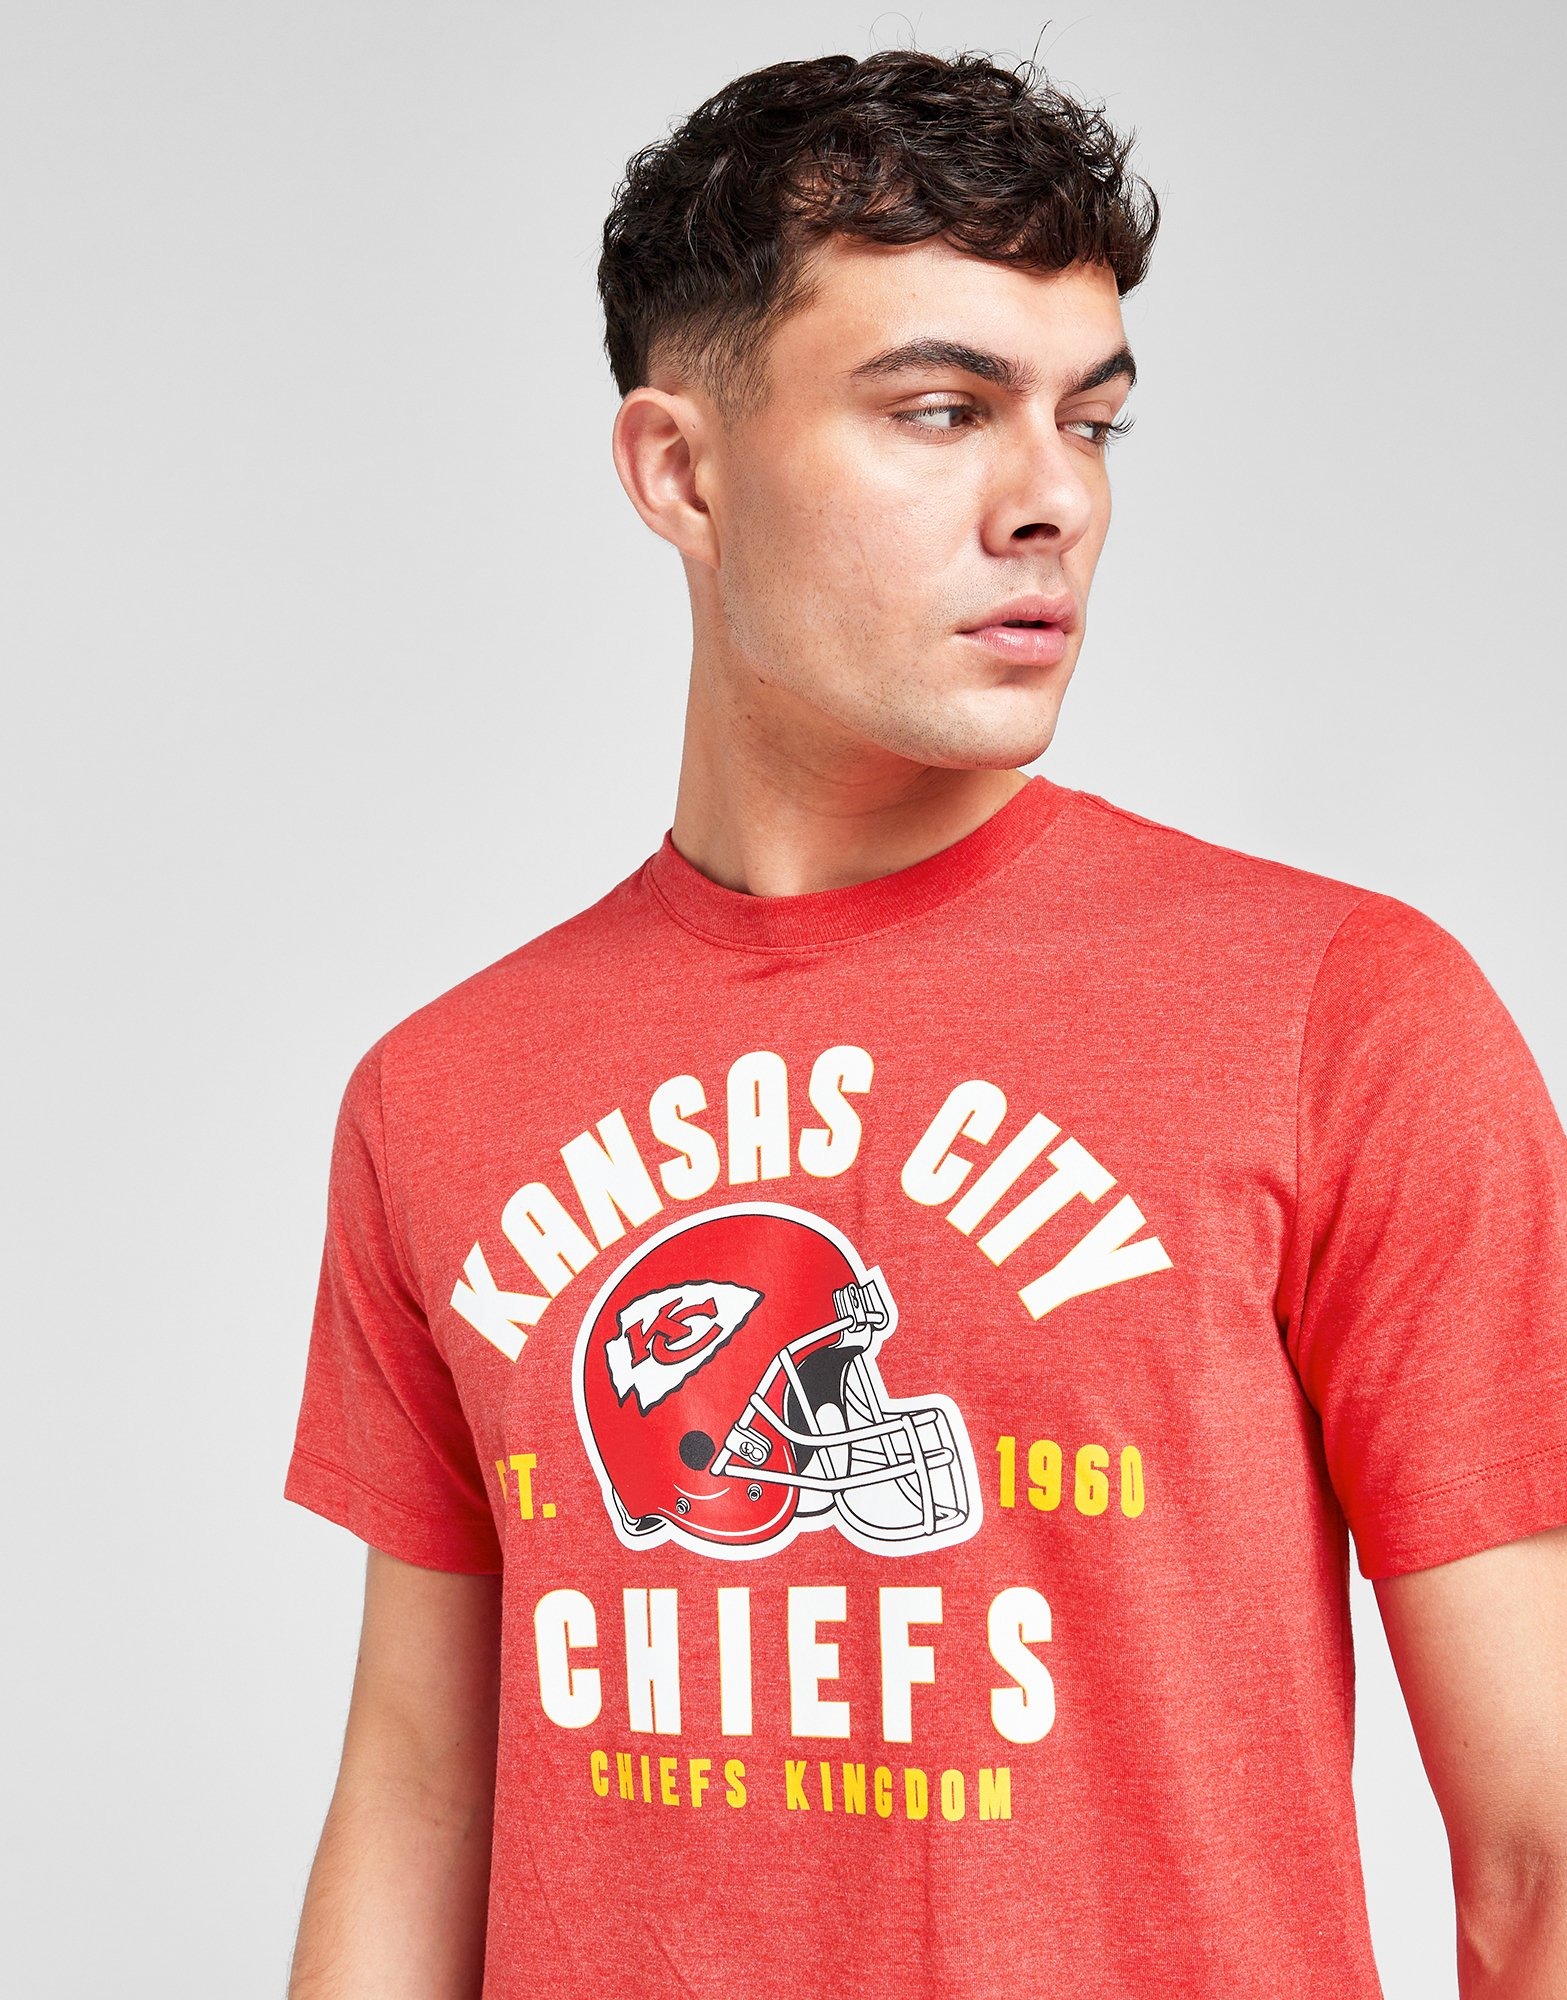 In My Kansas City Football Era T-shirt Retro Chiefs Crewneck 